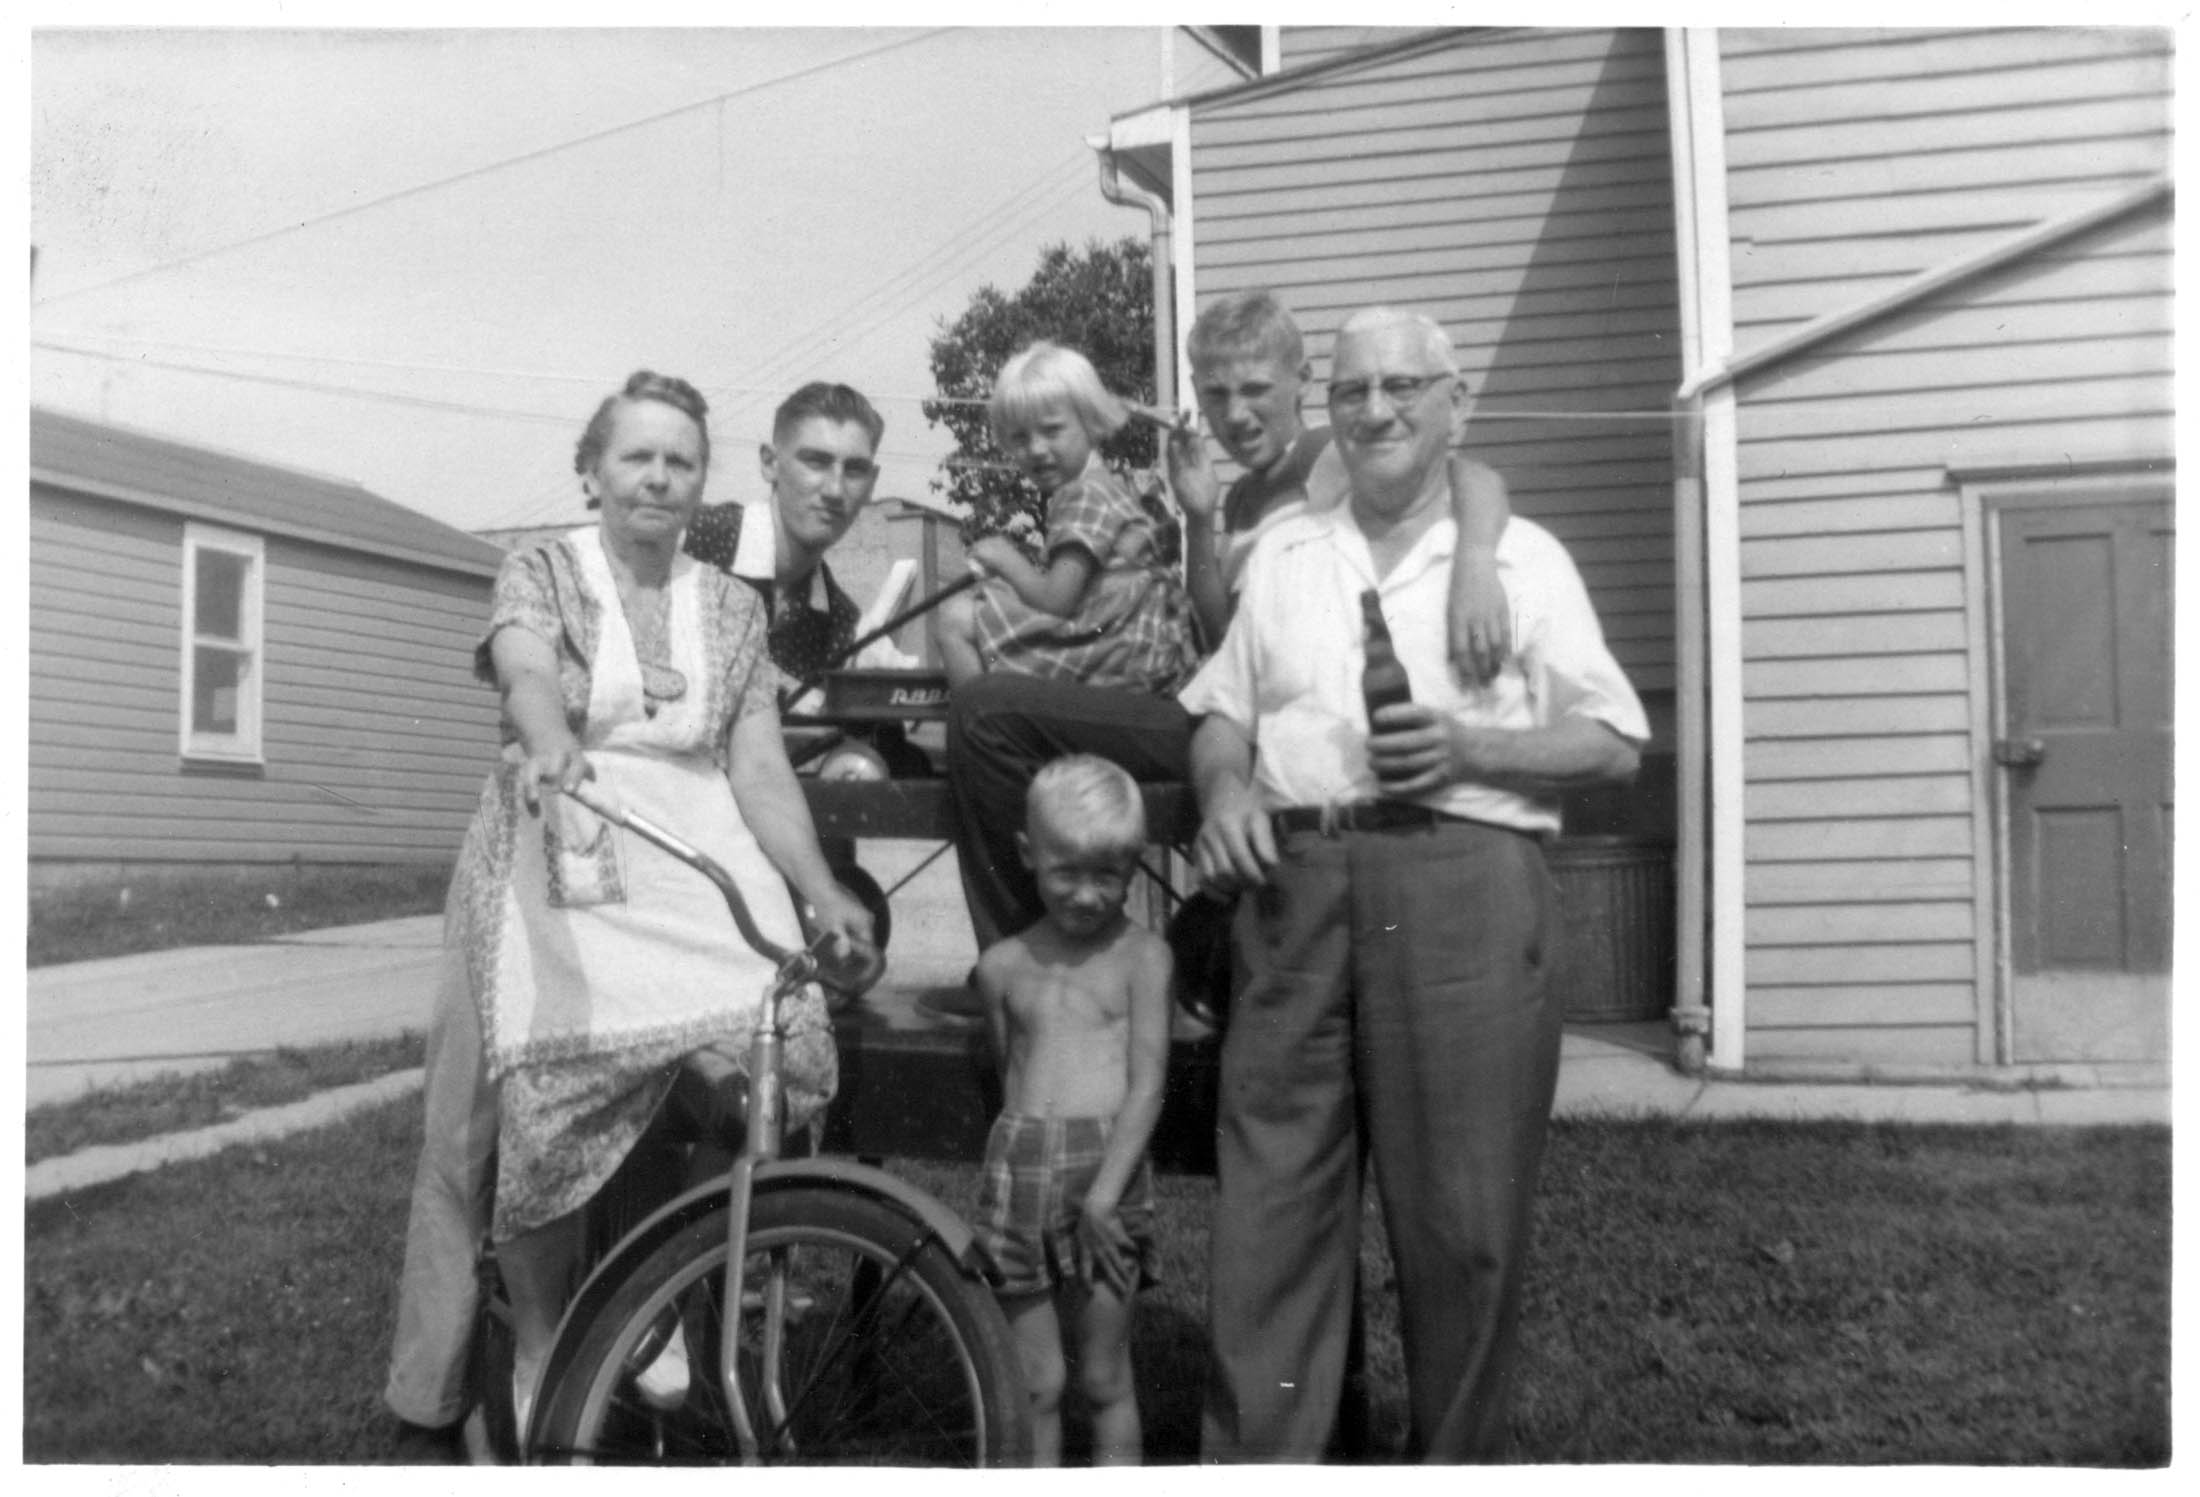 Family-photo-bicycle-wagon-on-table.jpg